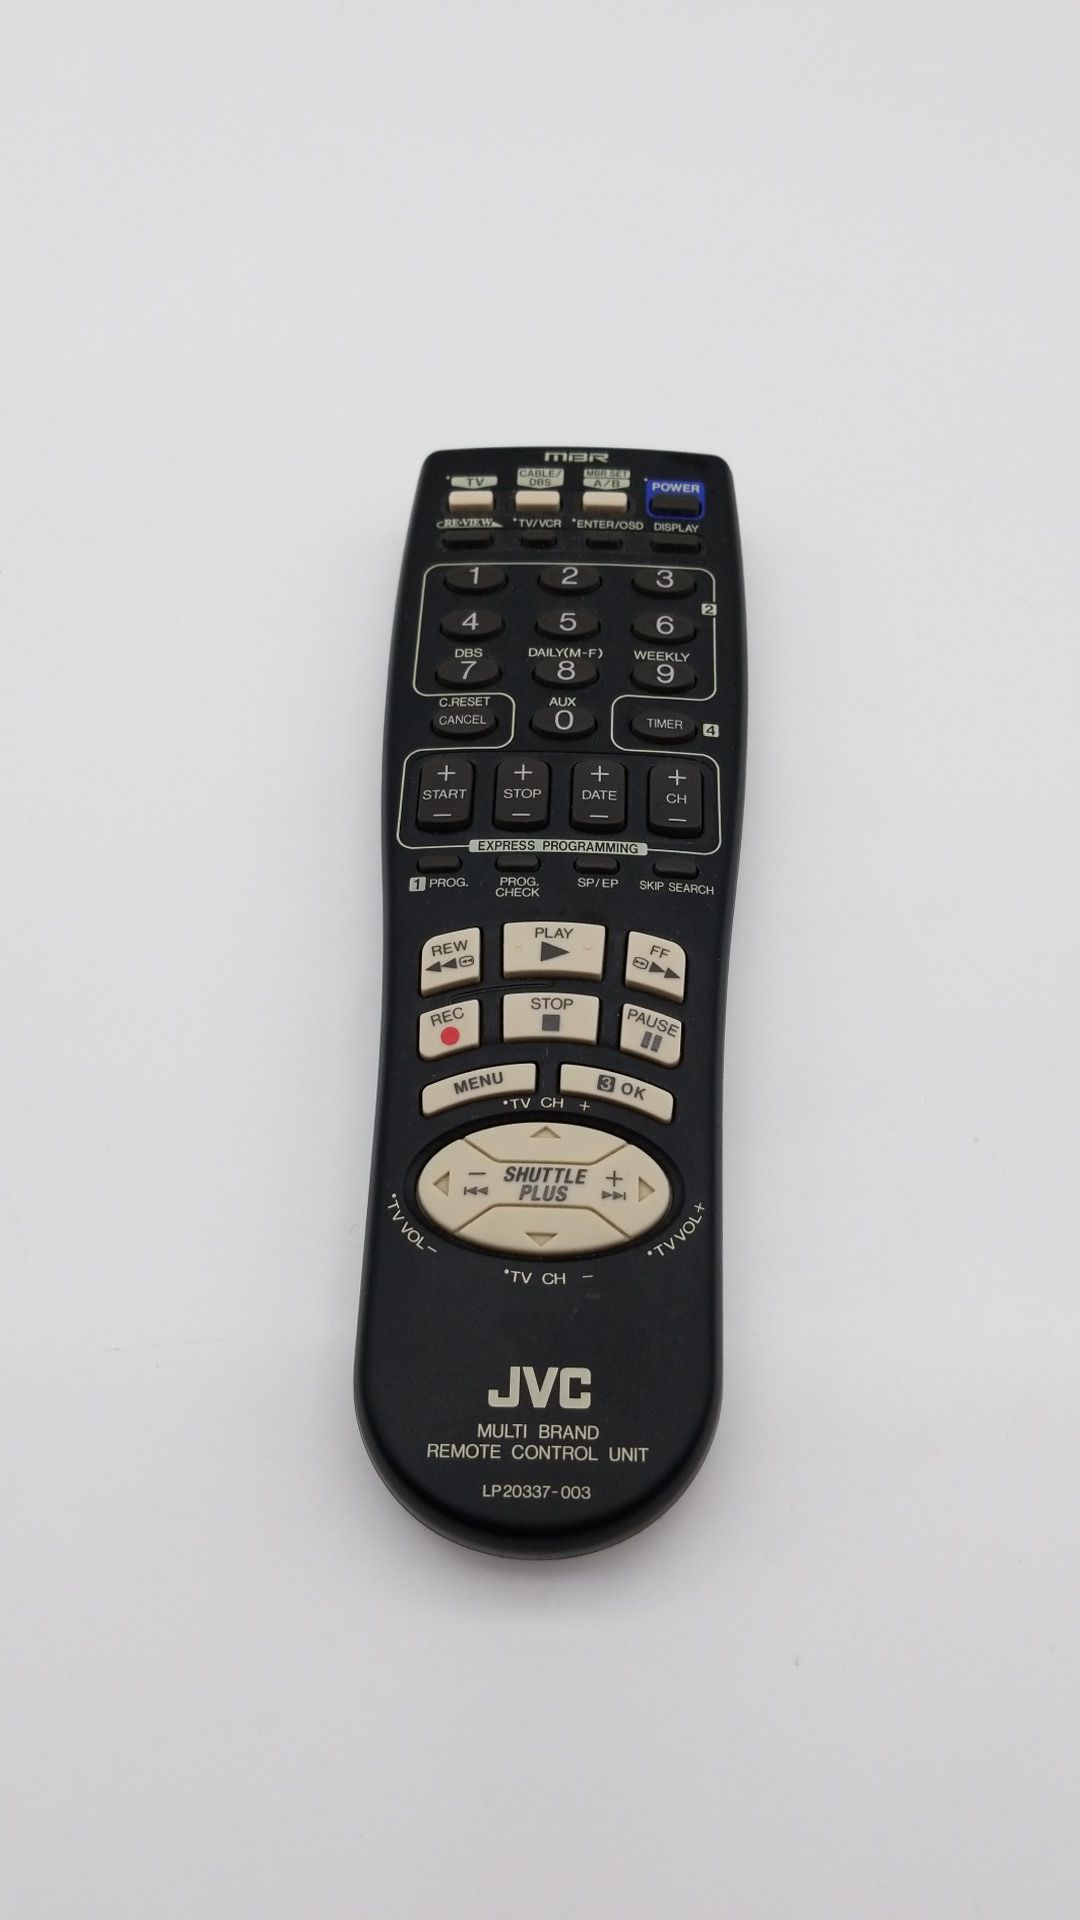 JVC VCR Remote LP20337-003 Works with JVC VCR HR-VP656U